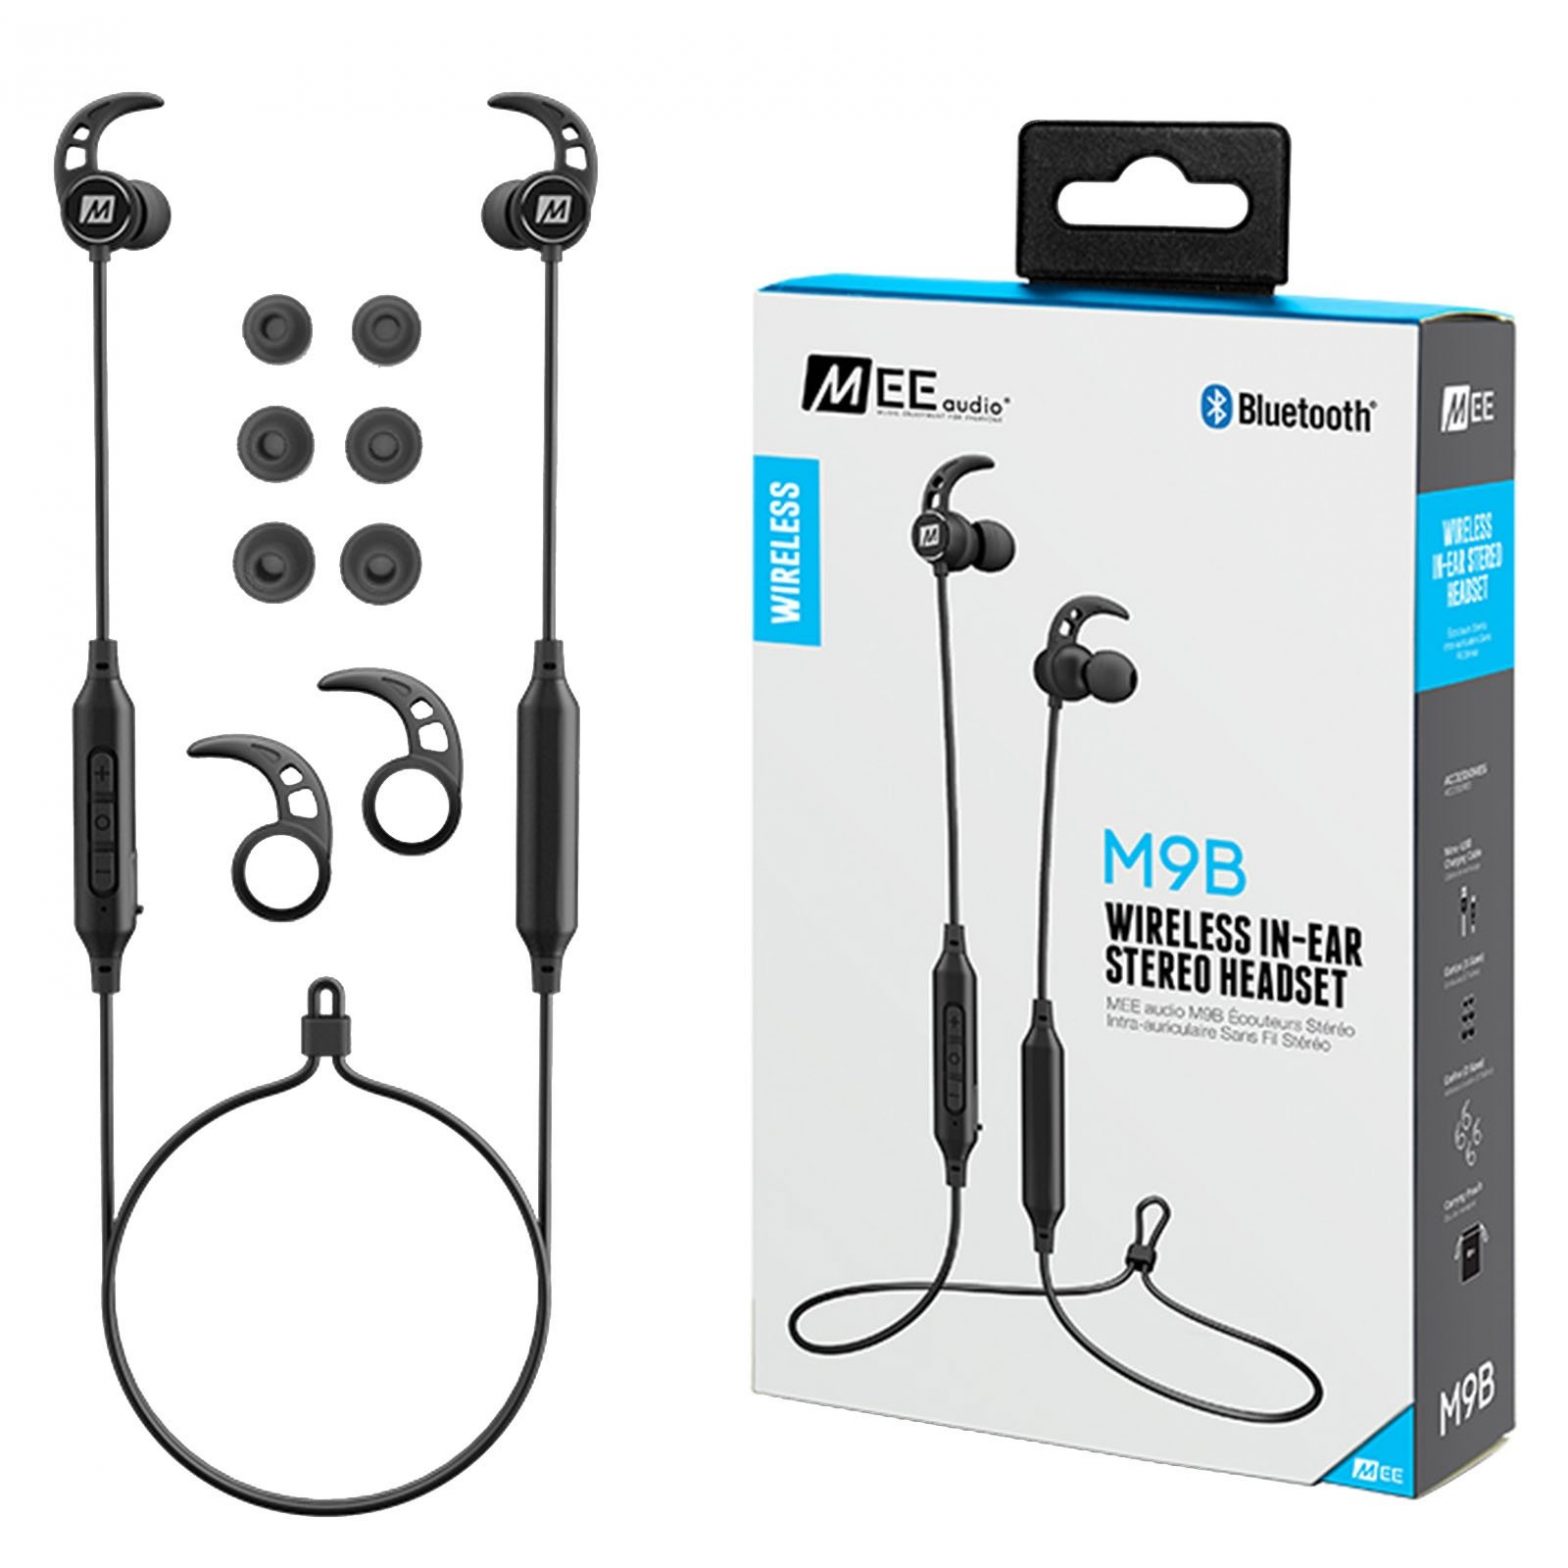 MEE audio M9B Wireless In-Ear Stereo Headset User Manual